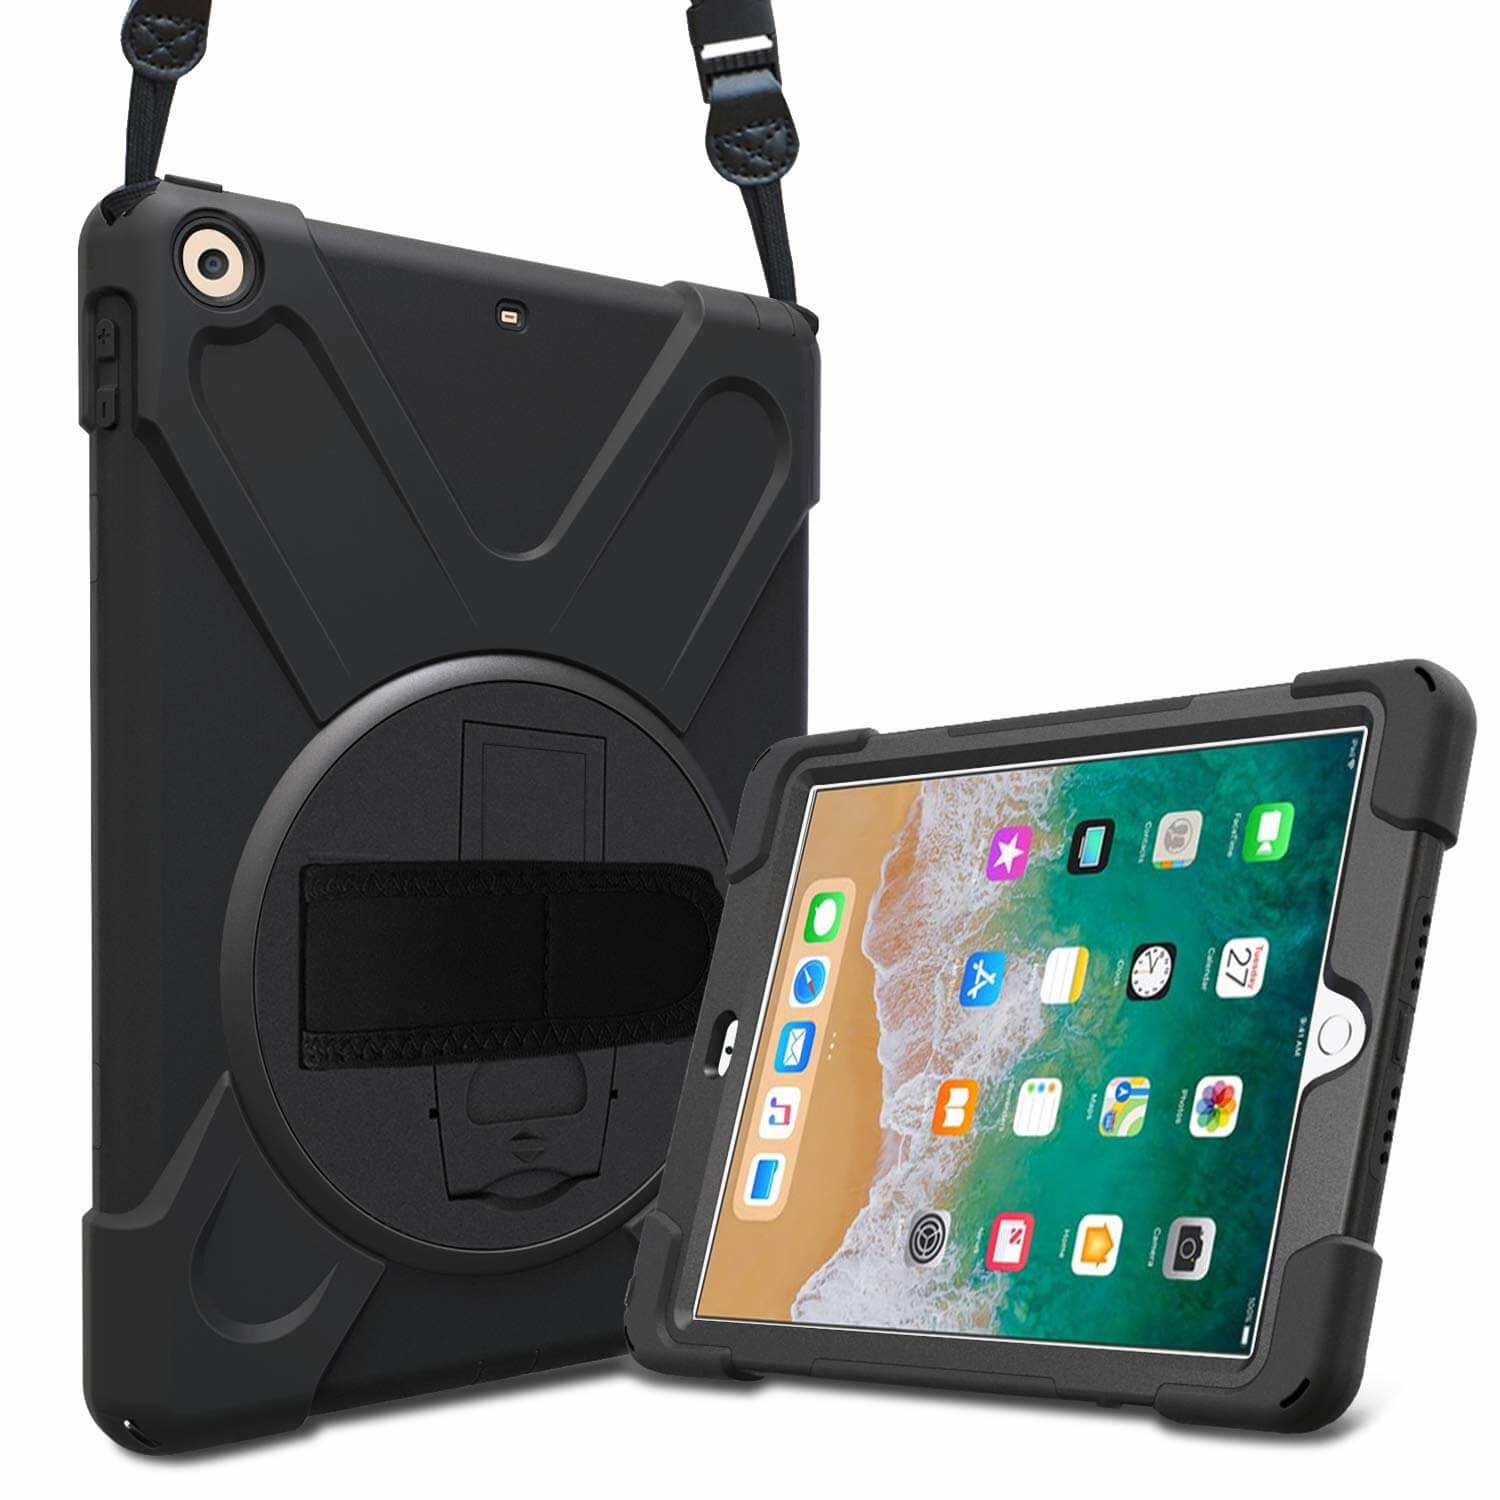 iPad Mini 4 Protector Hoes met handvat schouderriem en standaard - iPadspullekes